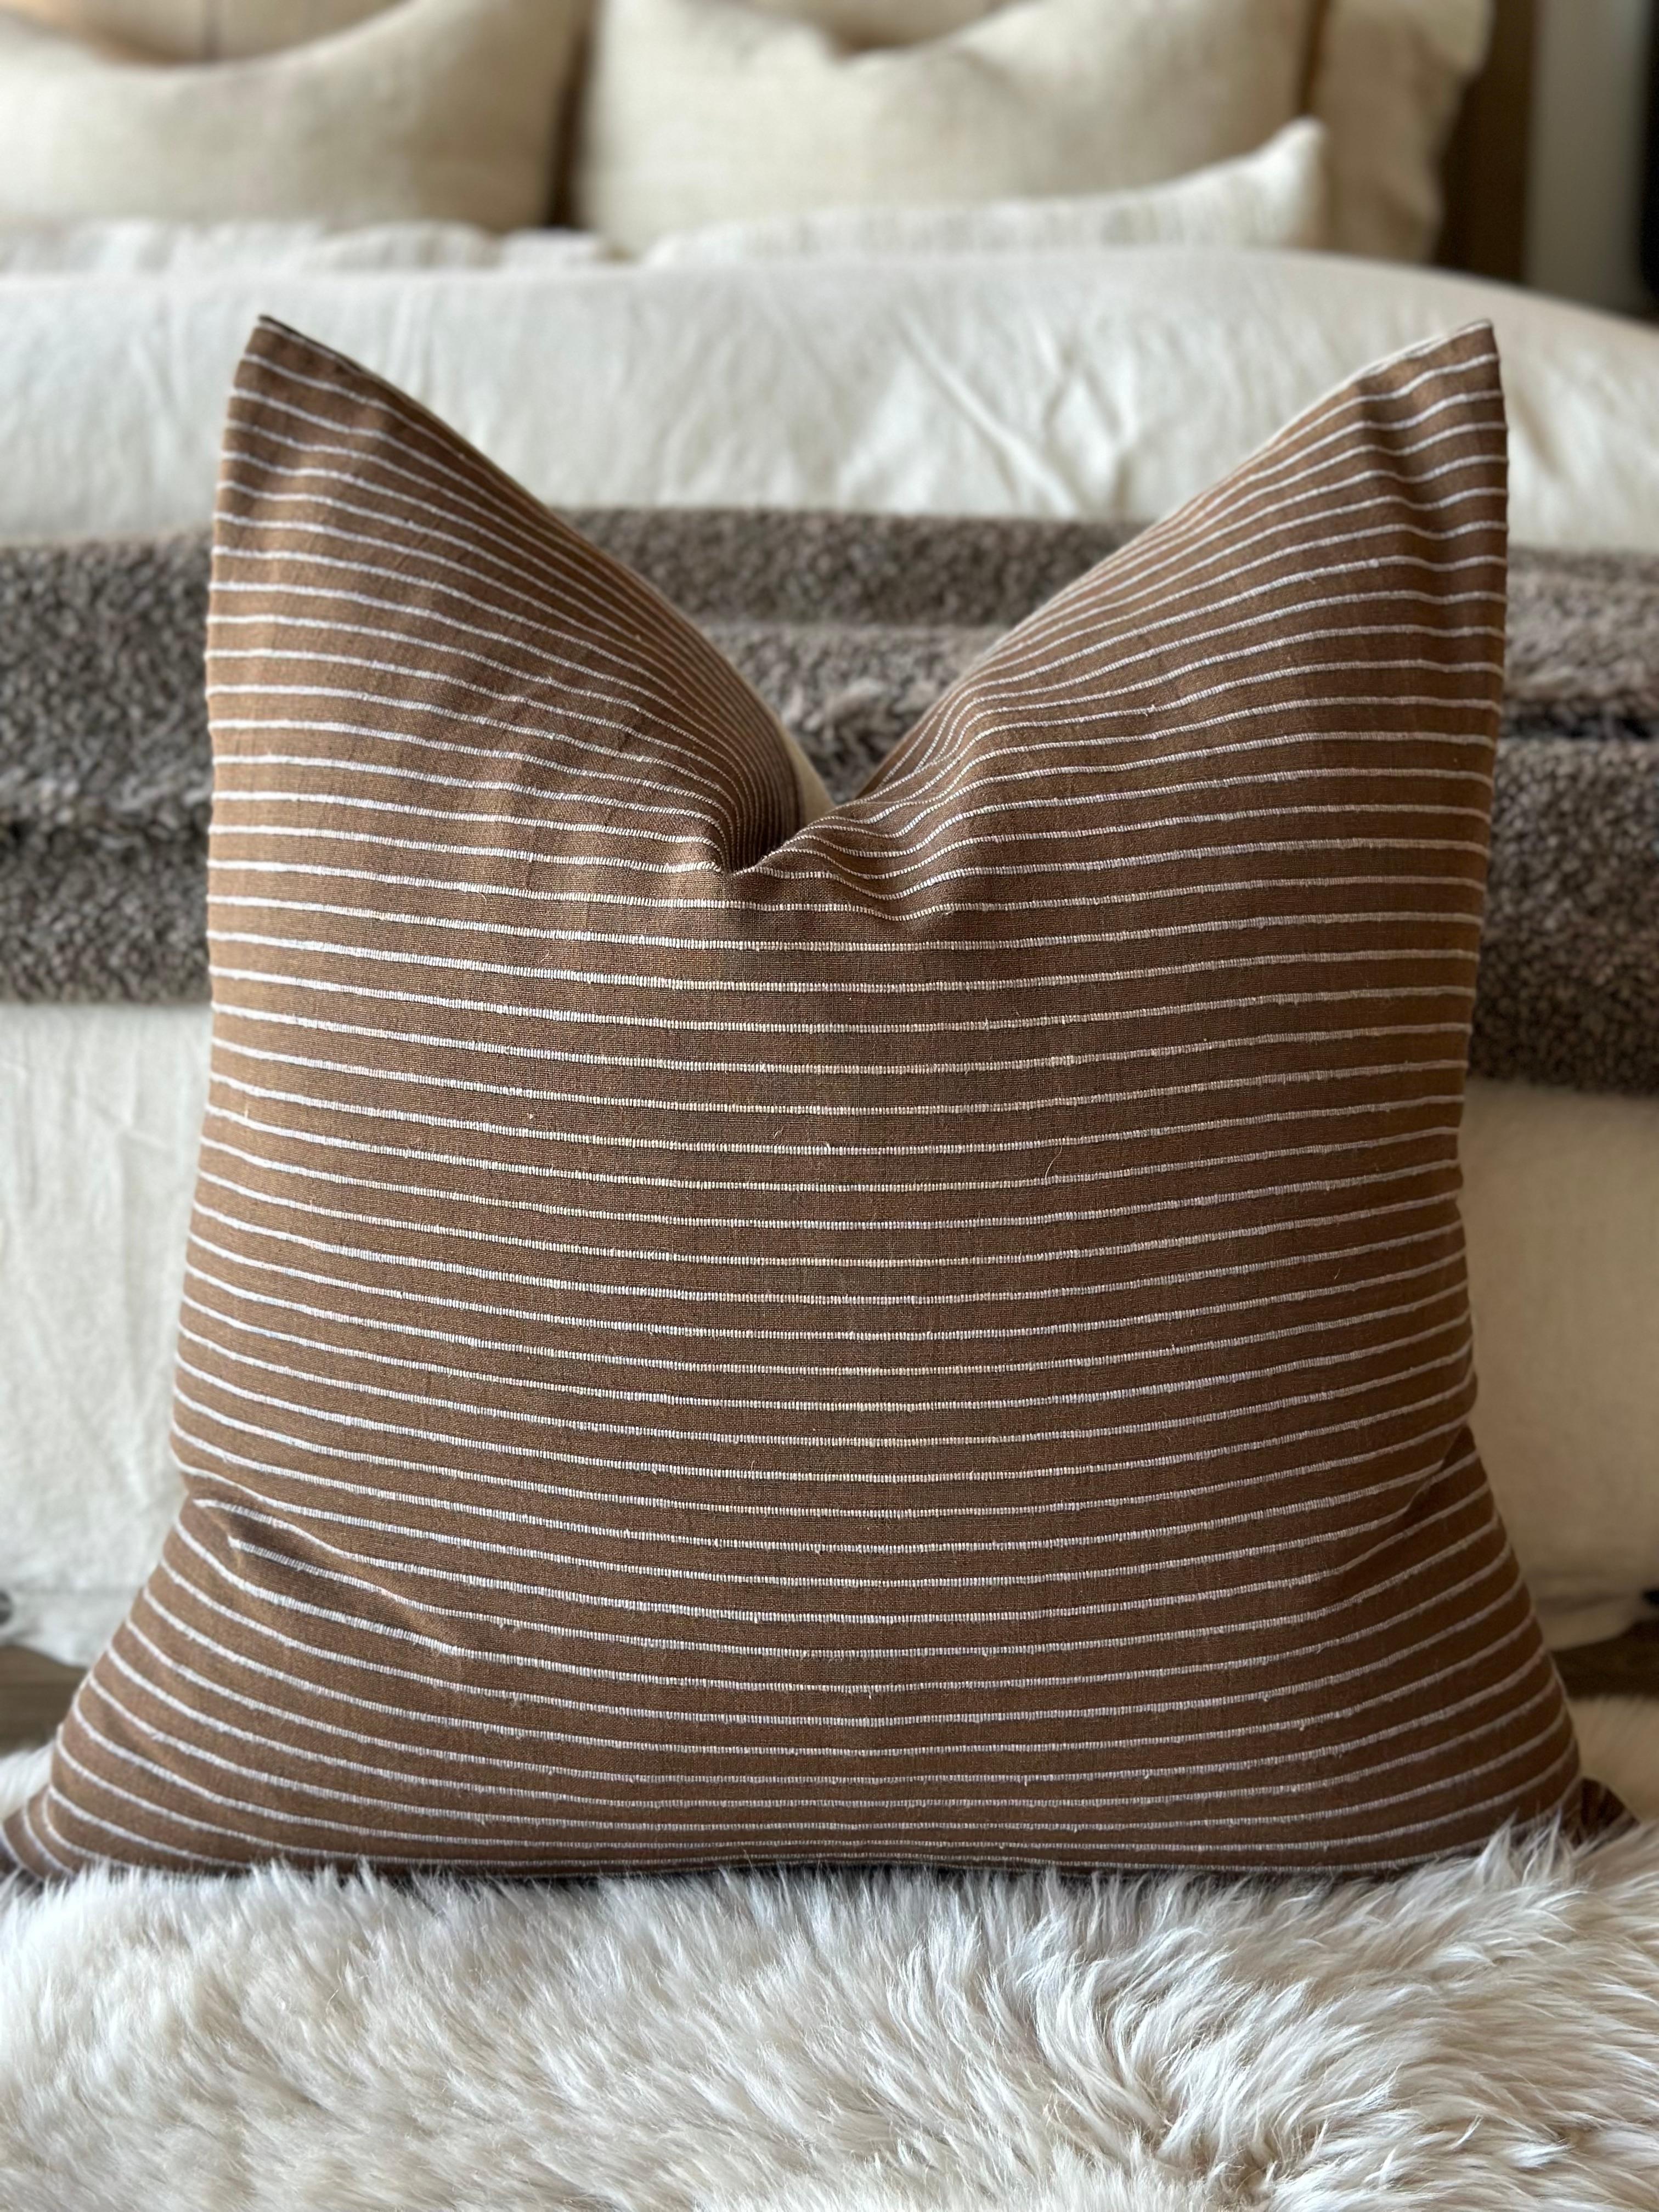 Whittier Brown and Cream Stripe Linen Pillow with Downs Insert (Oreiller en lin à rayures marron et crème avec garniture en duvet) Neuf à Brea, CA